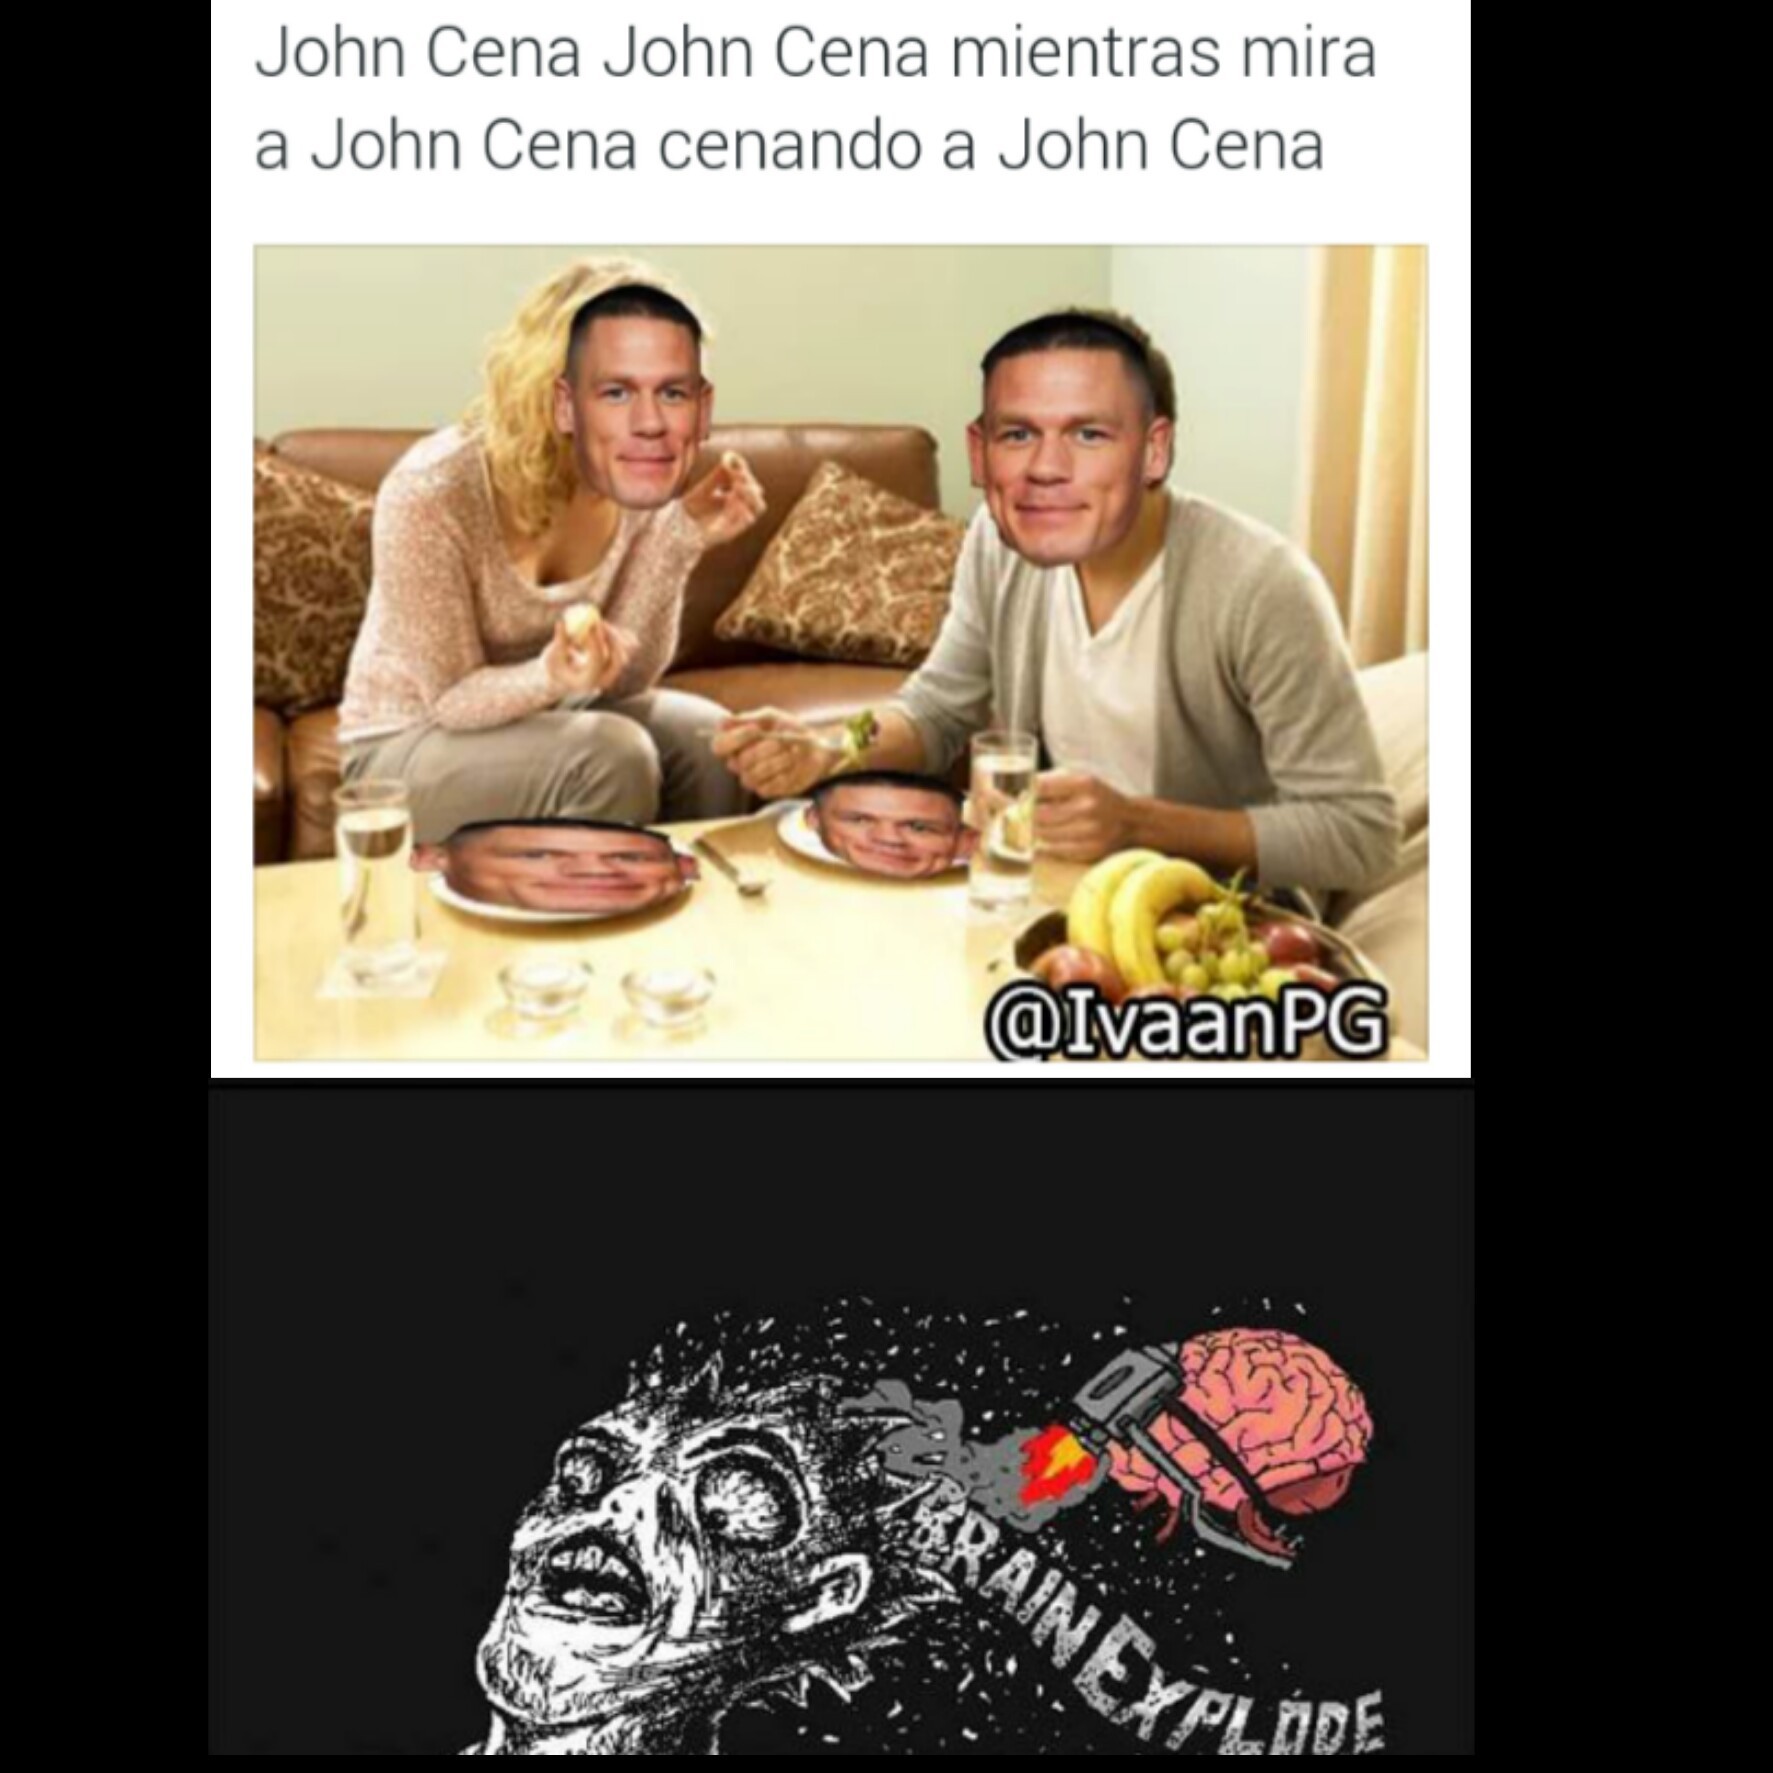 John cena Jonh Cena mientras mira a John Cena cenando John Cena - meme